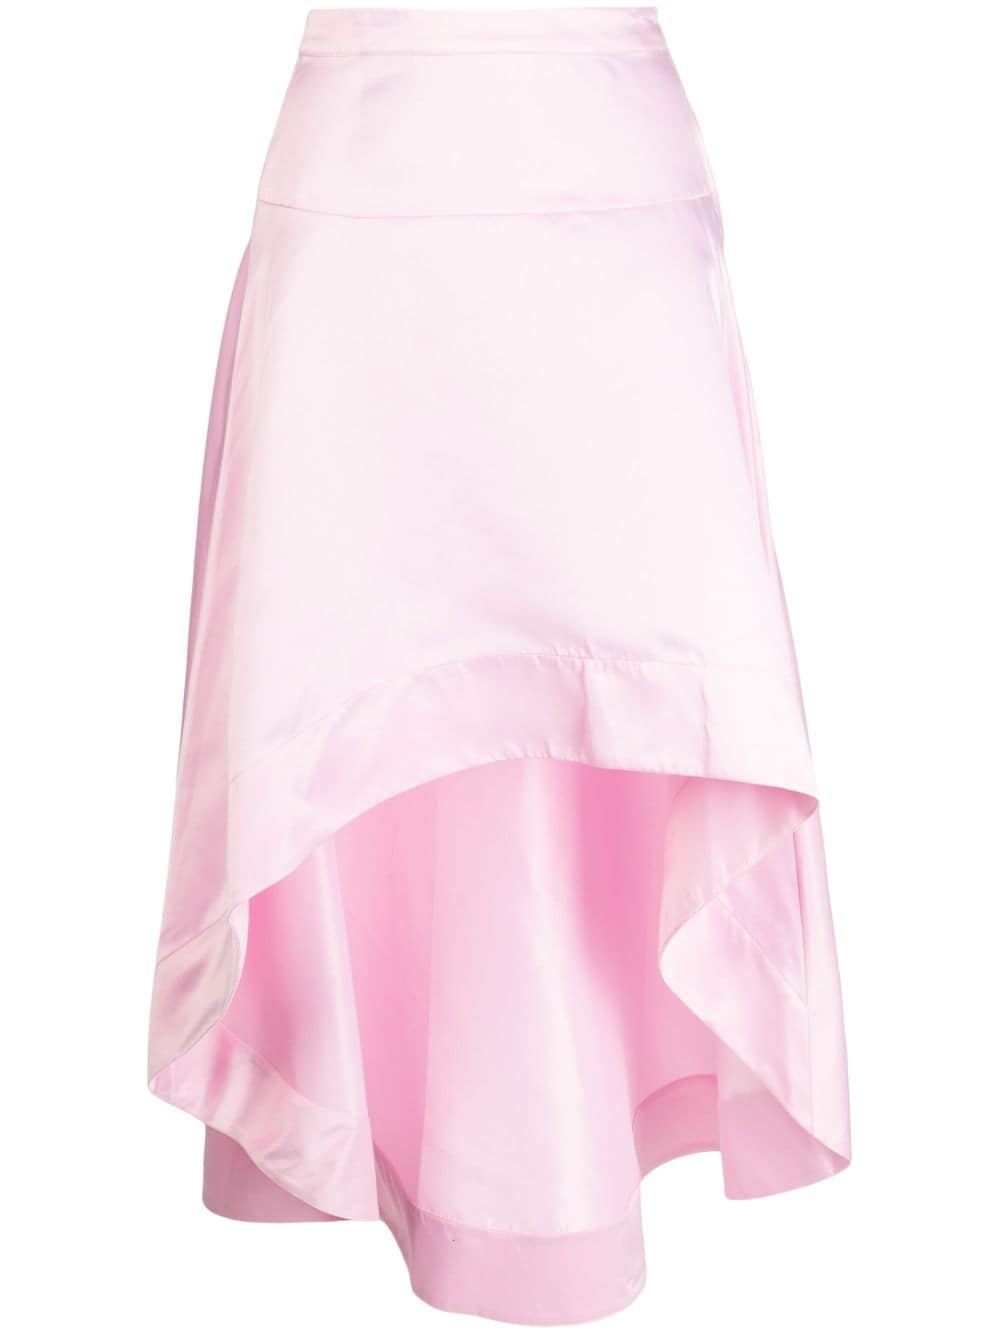 Cynthia Rowley satin high-low asymmetric skirt - Pink von Cynthia Rowley